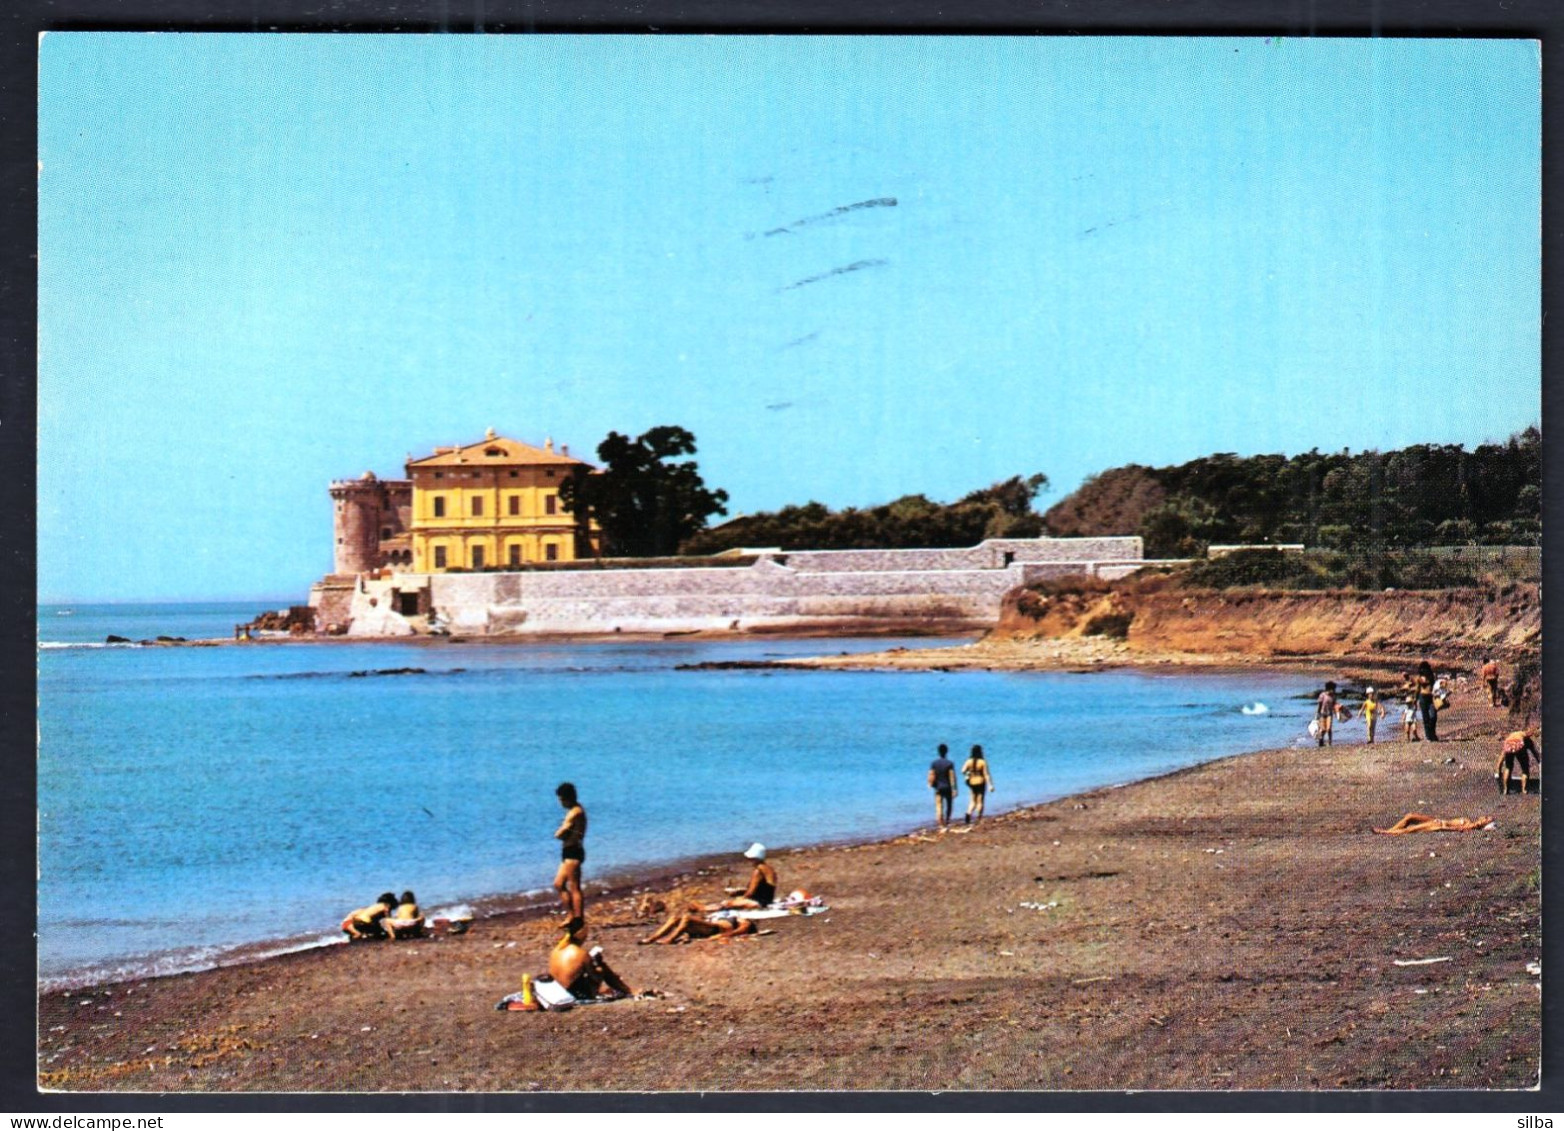 Italy Roma Rome 1974 / Marina Di S. Nicola / Panorama, Beach - Viste Panoramiche, Panorama